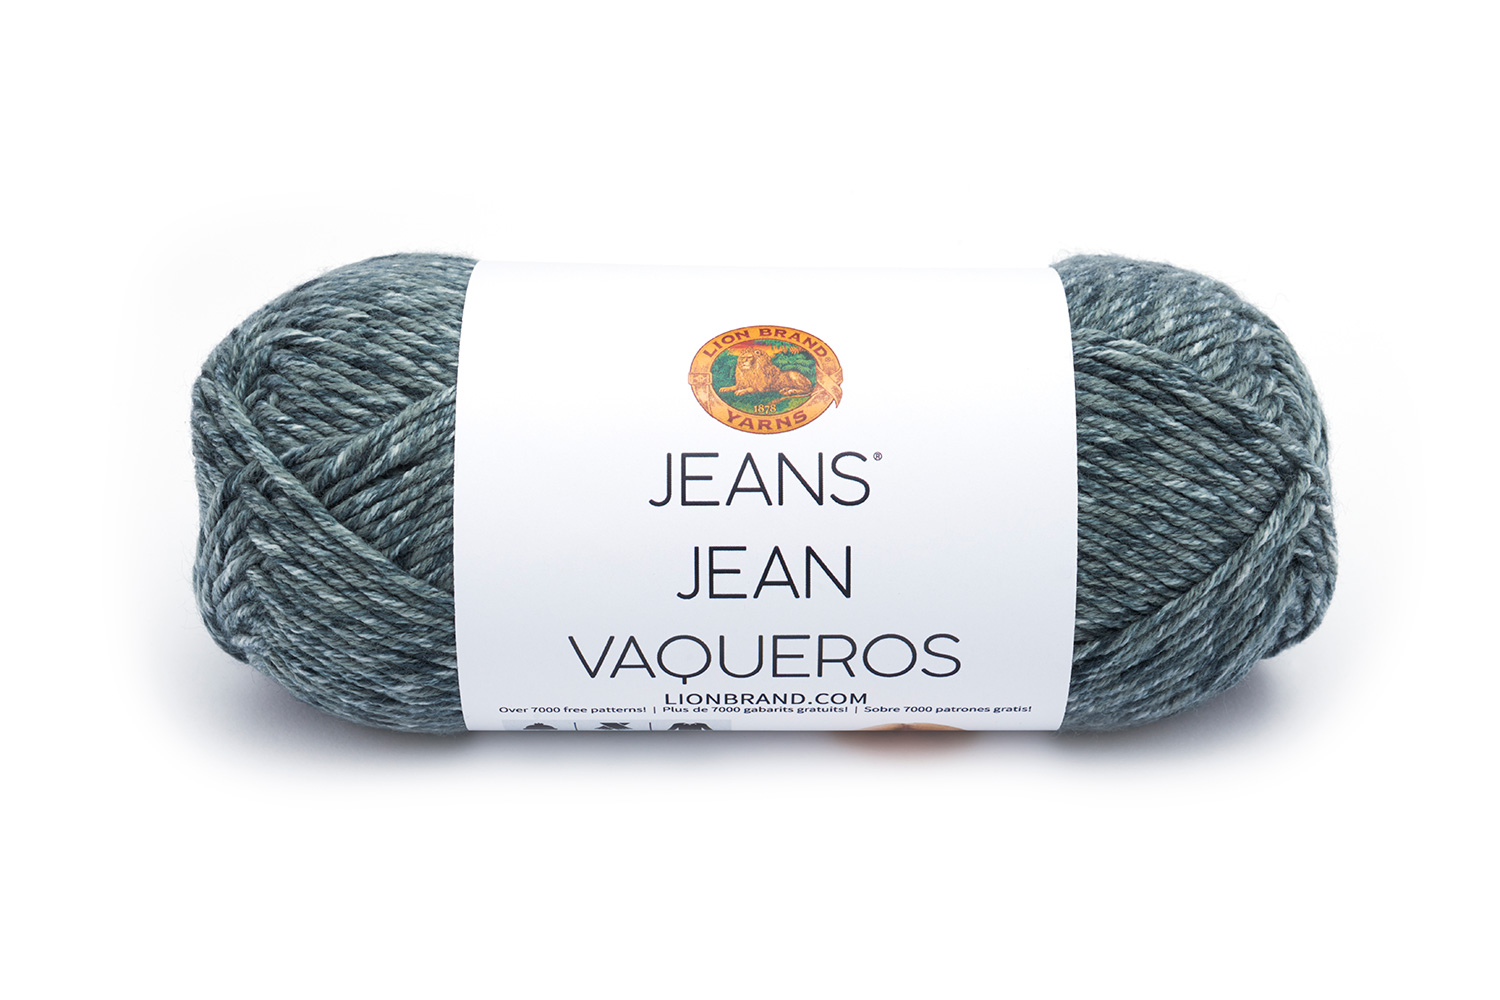 Jeans Yarn in Vintage